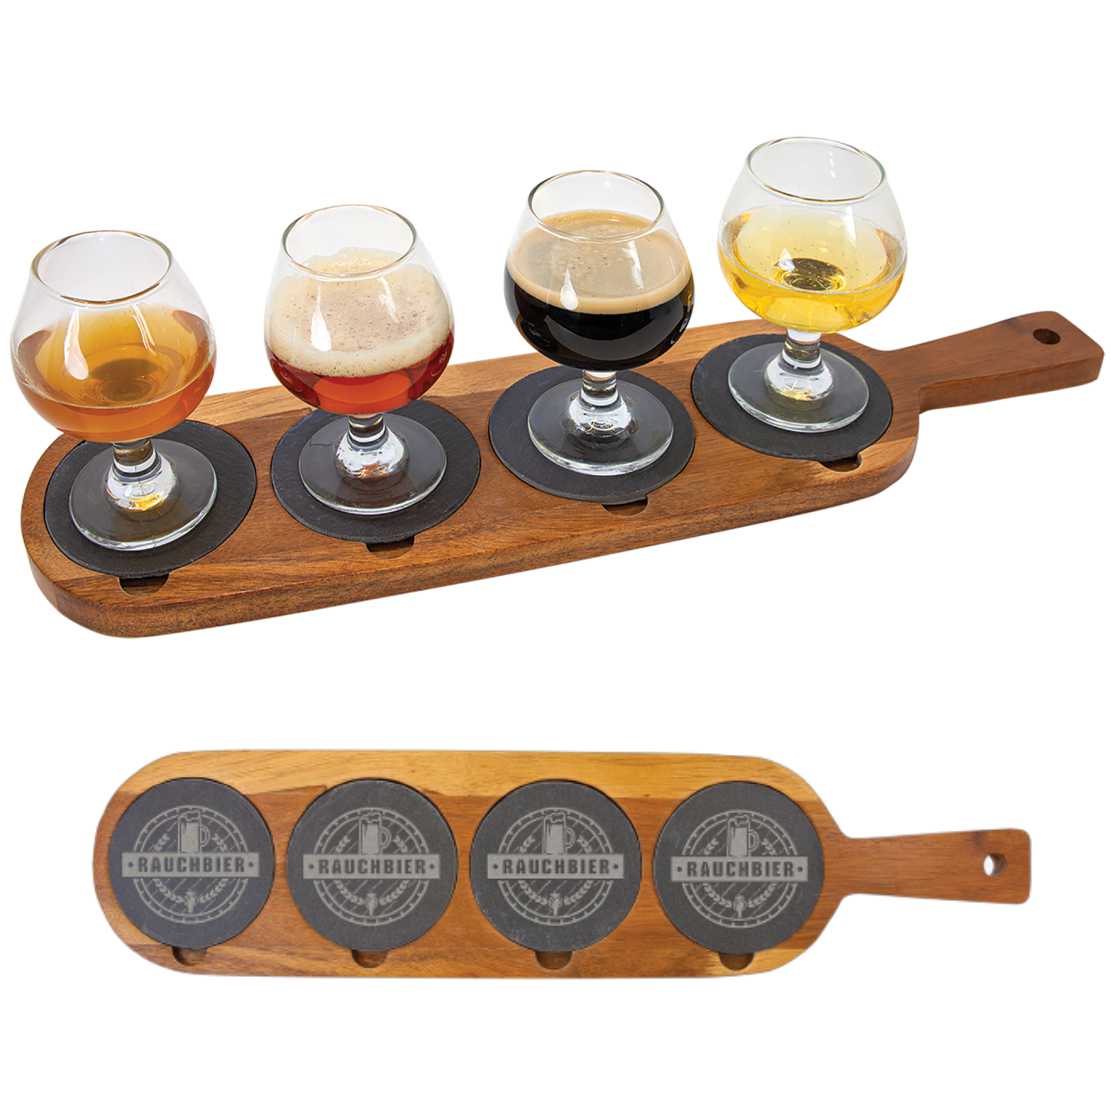 Beer Tasting Set with Slate Coasters Serving Board